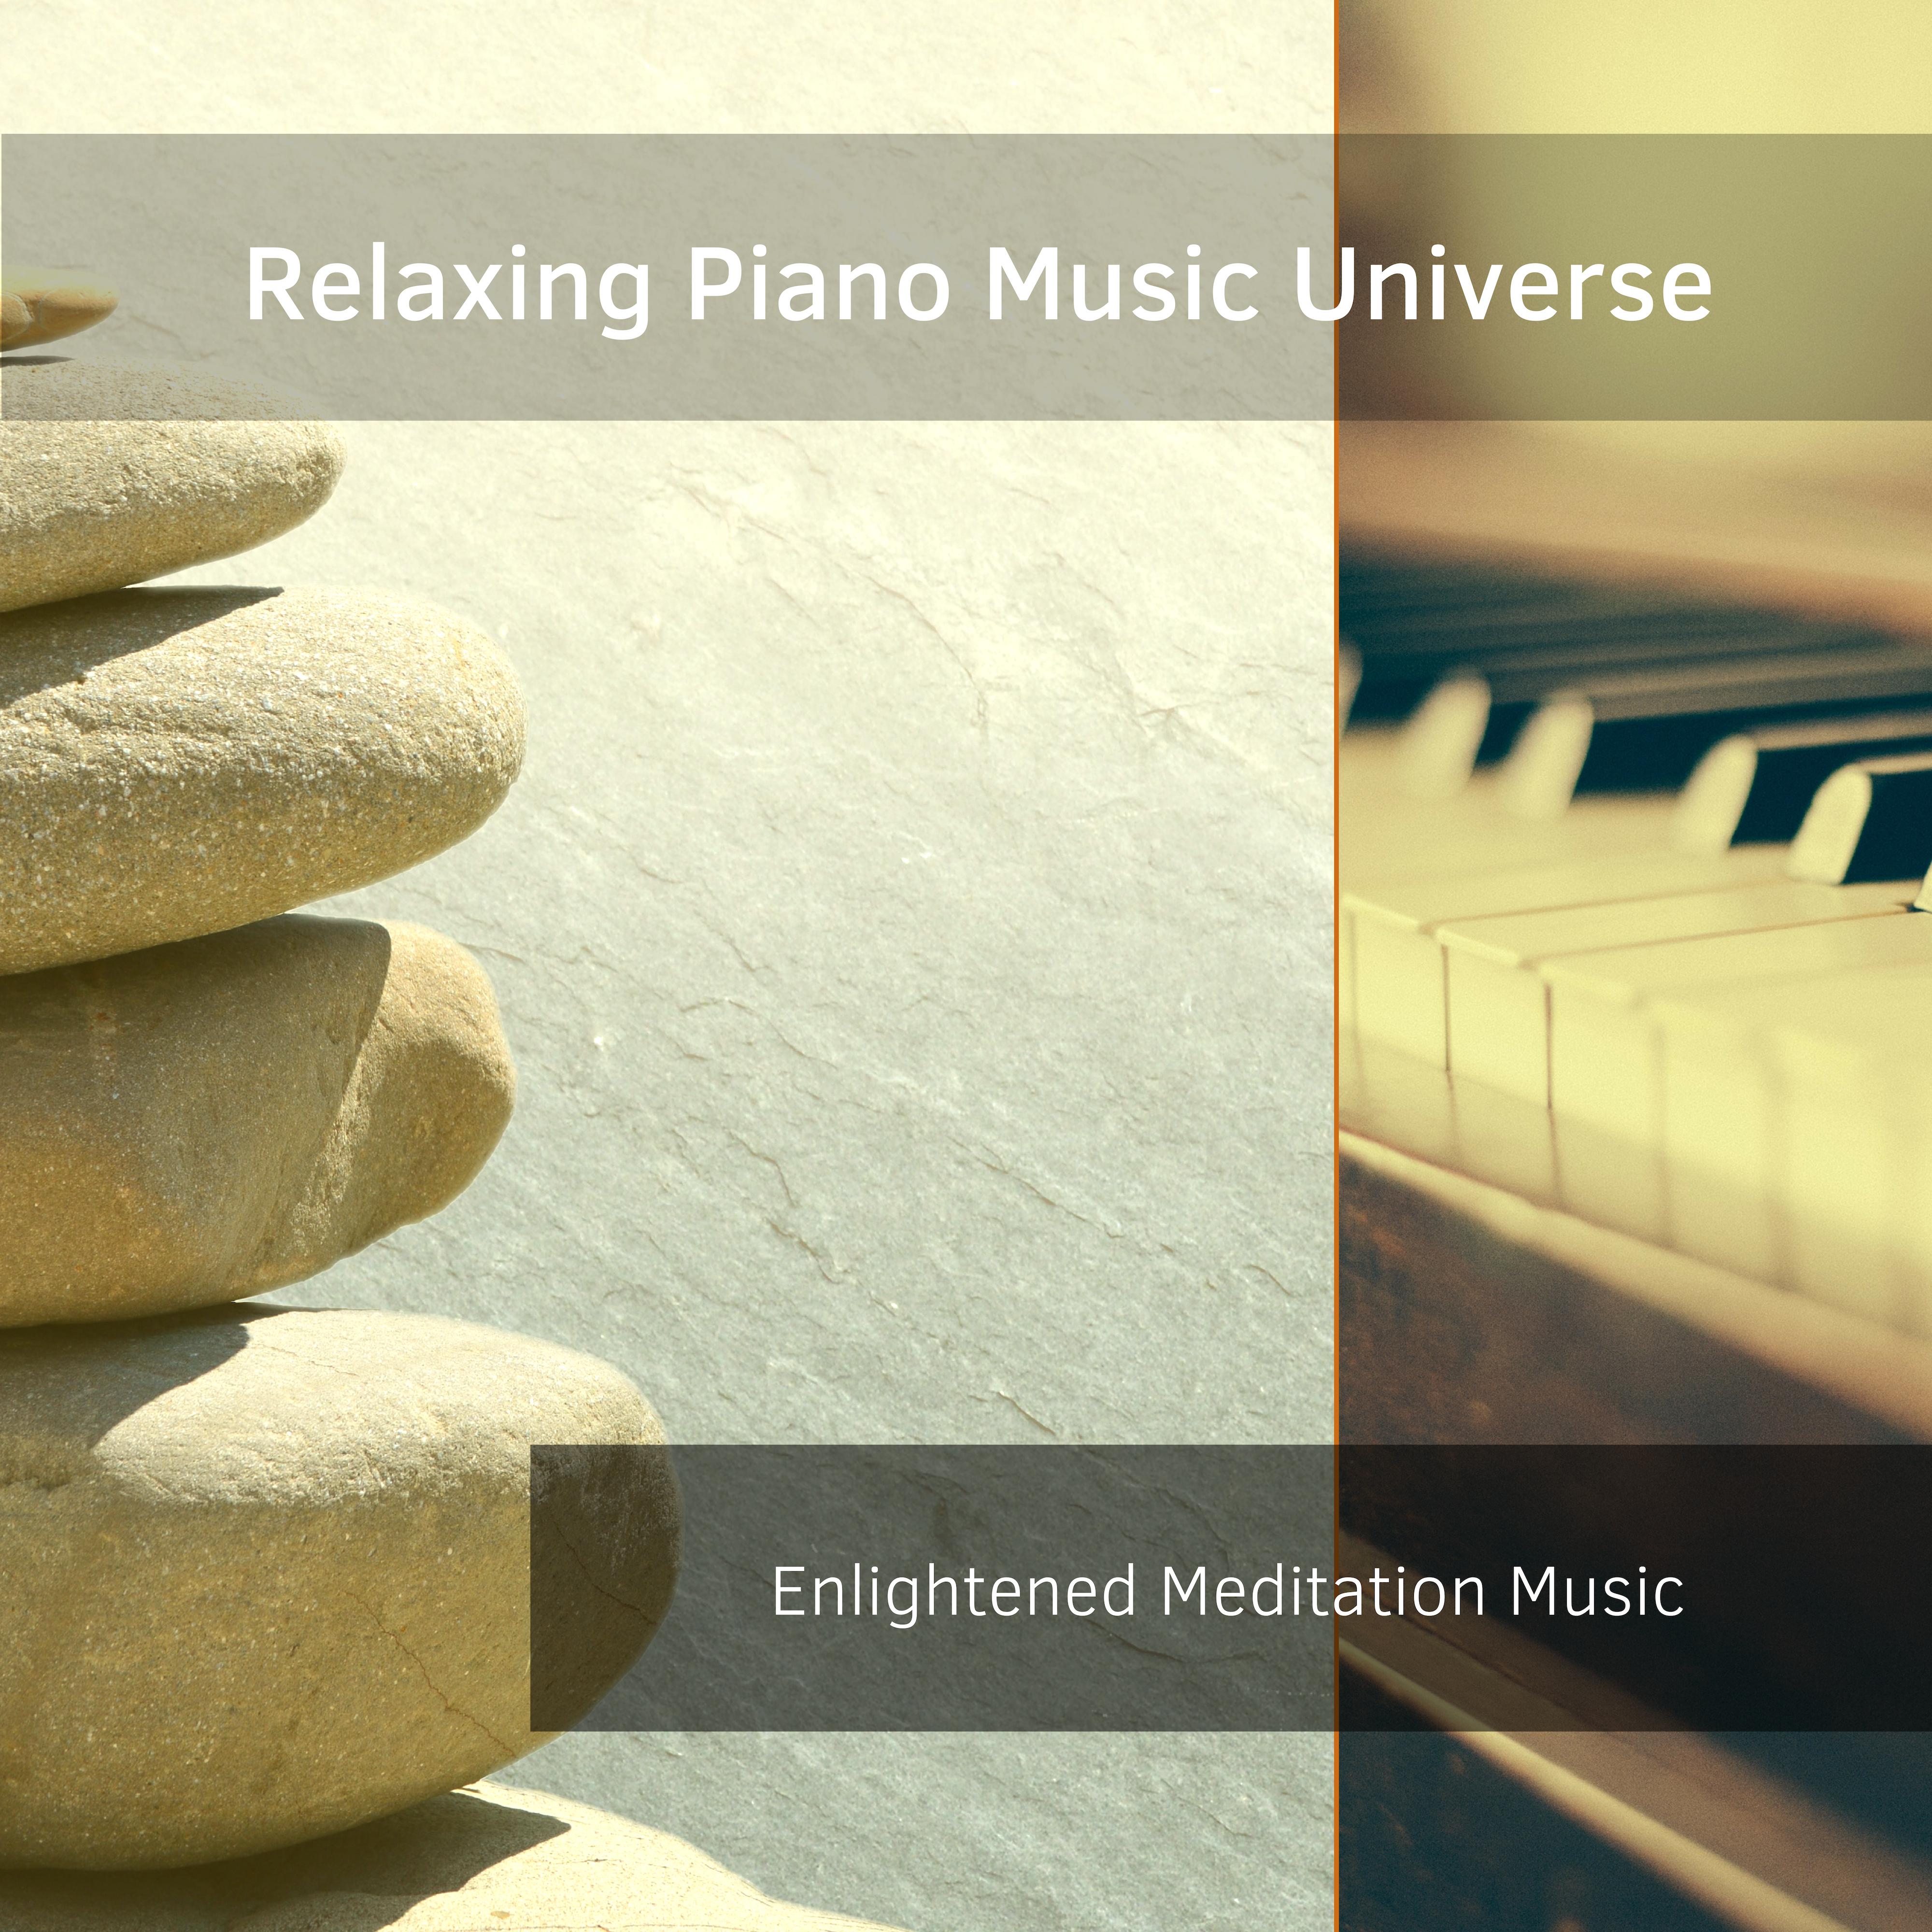 Conclusive Instrumental Music for Enlightened Meditation